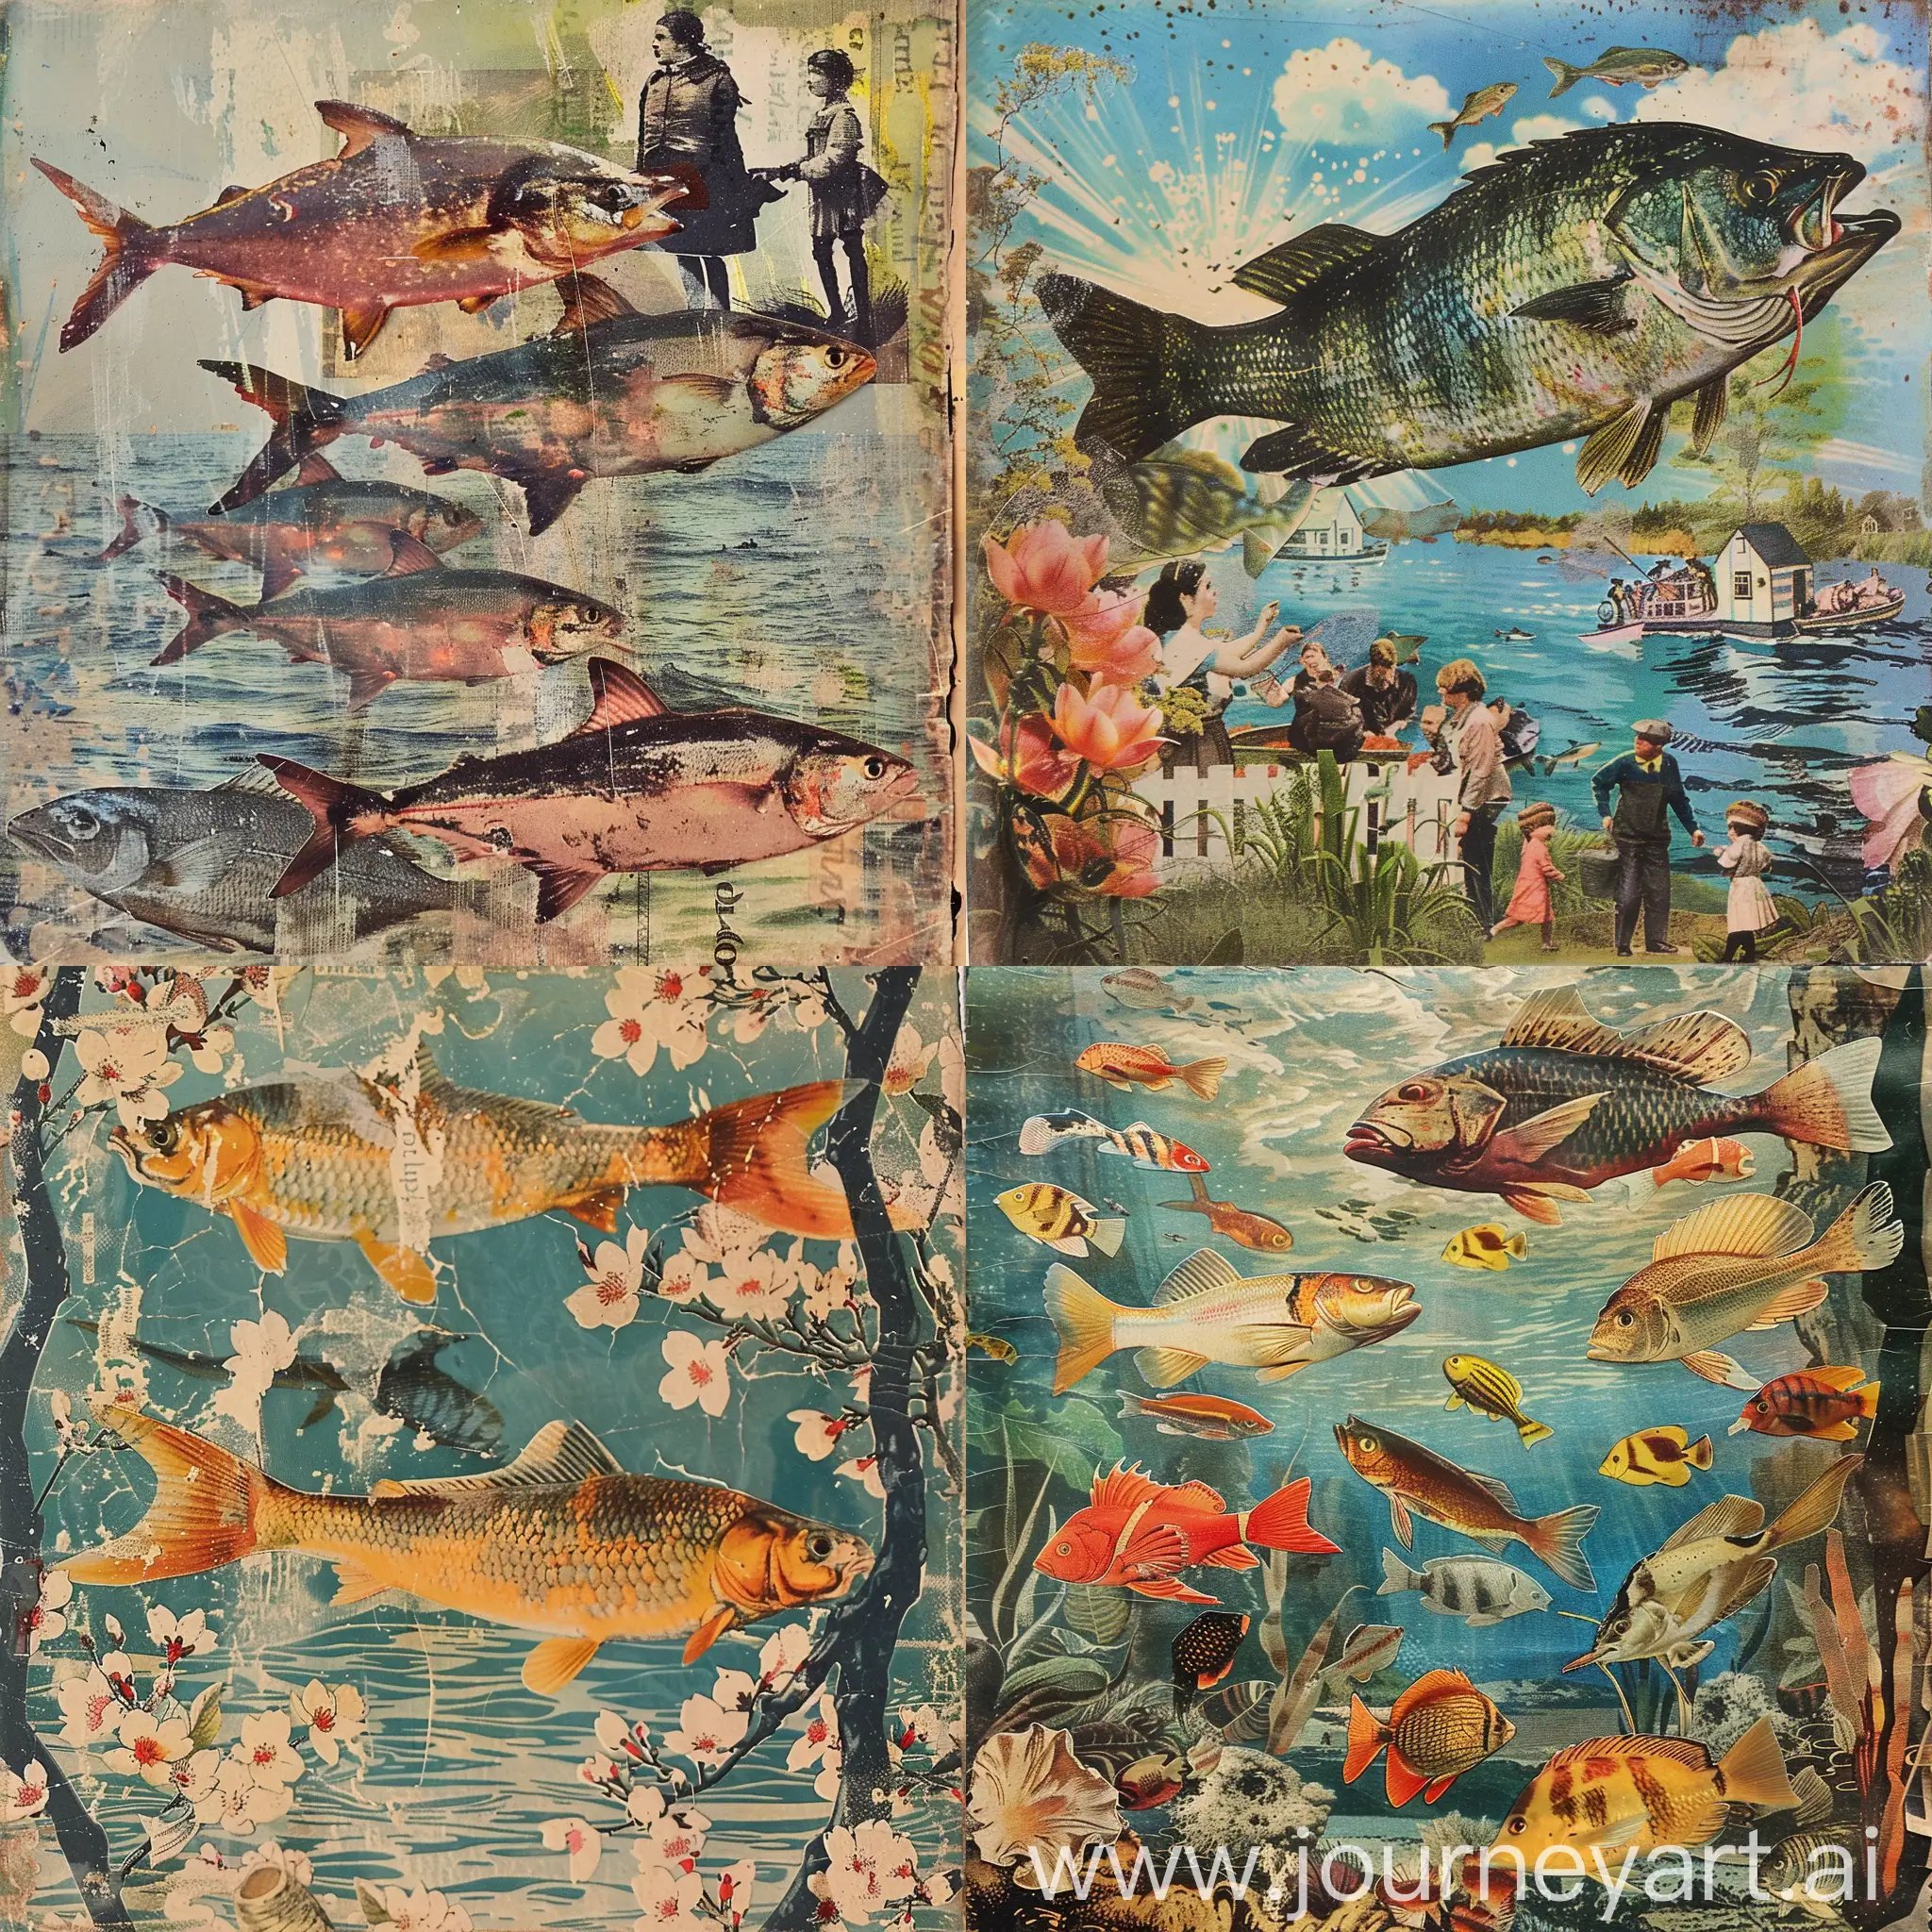 Vintage-Collage-Style-April-Fish-Festival-Celebration